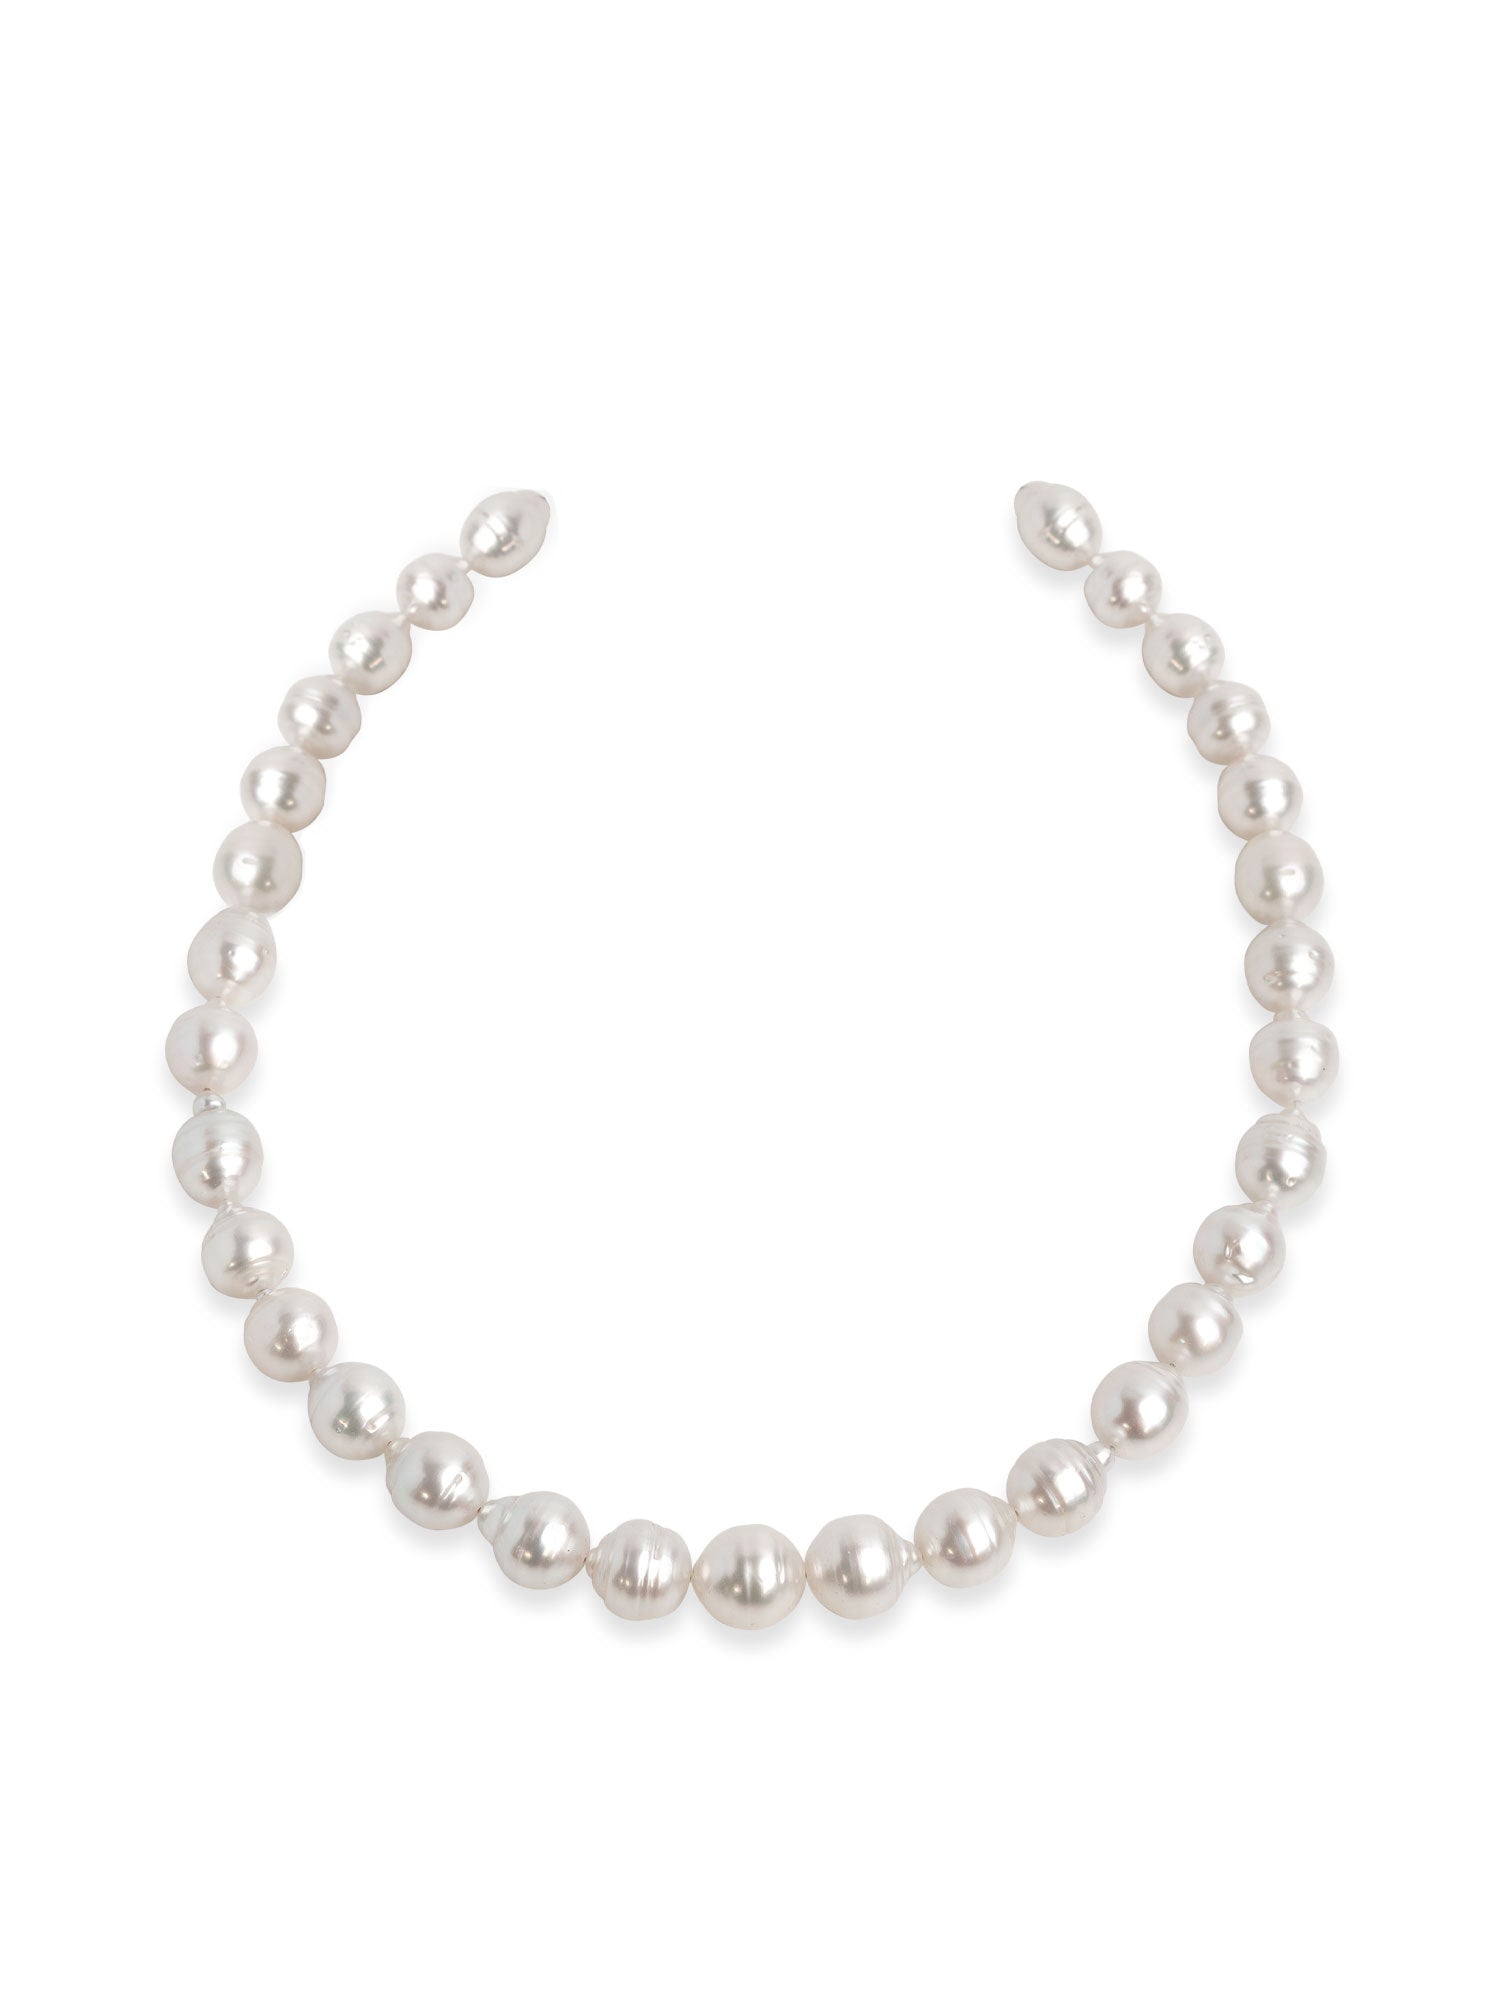 Collar de perlas cultivadas Australianas Barrocas Anilladas de 10 - 13 mm Secret & You